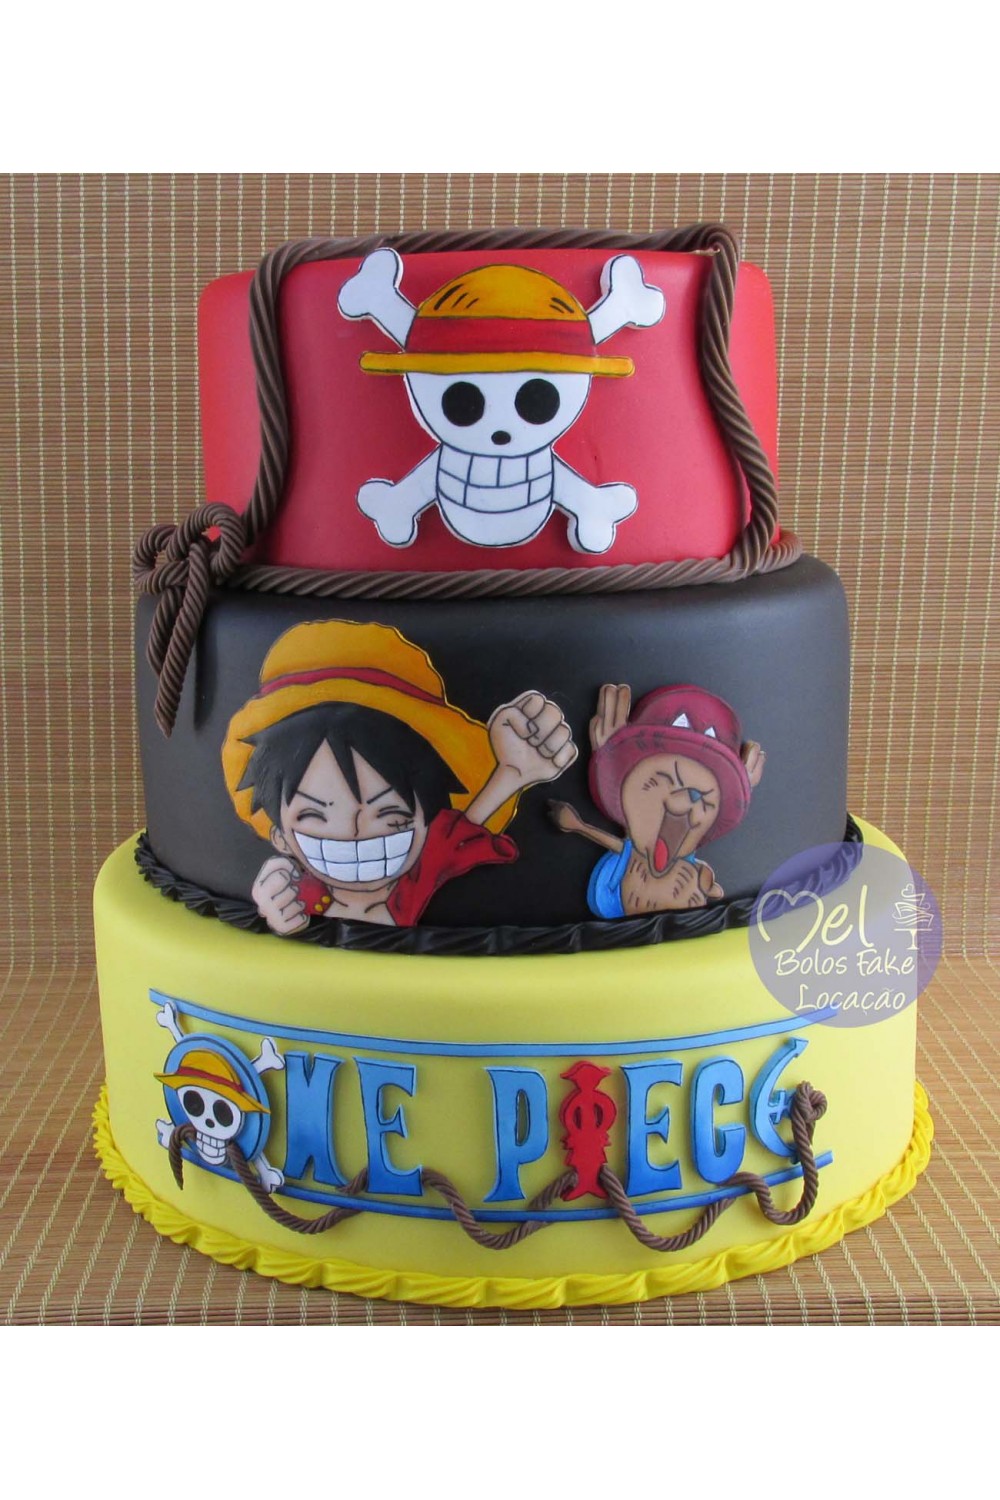 Bolo One Piece